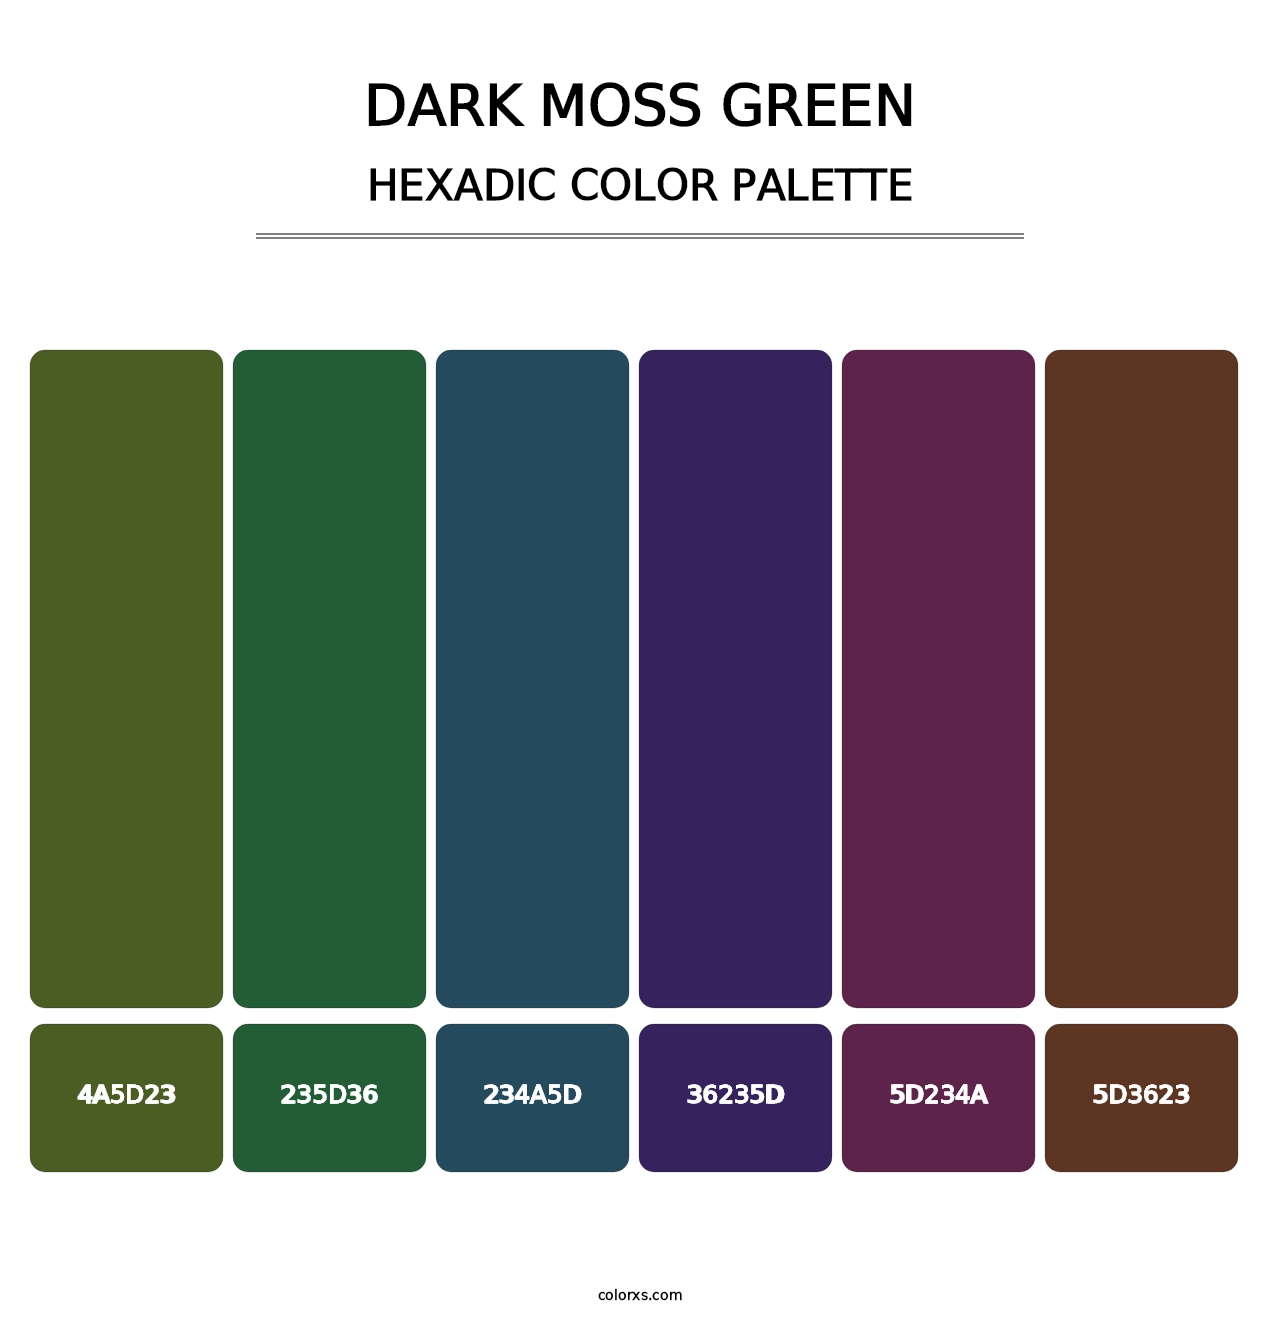 Dark Moss Green - Hexadic Color Palette